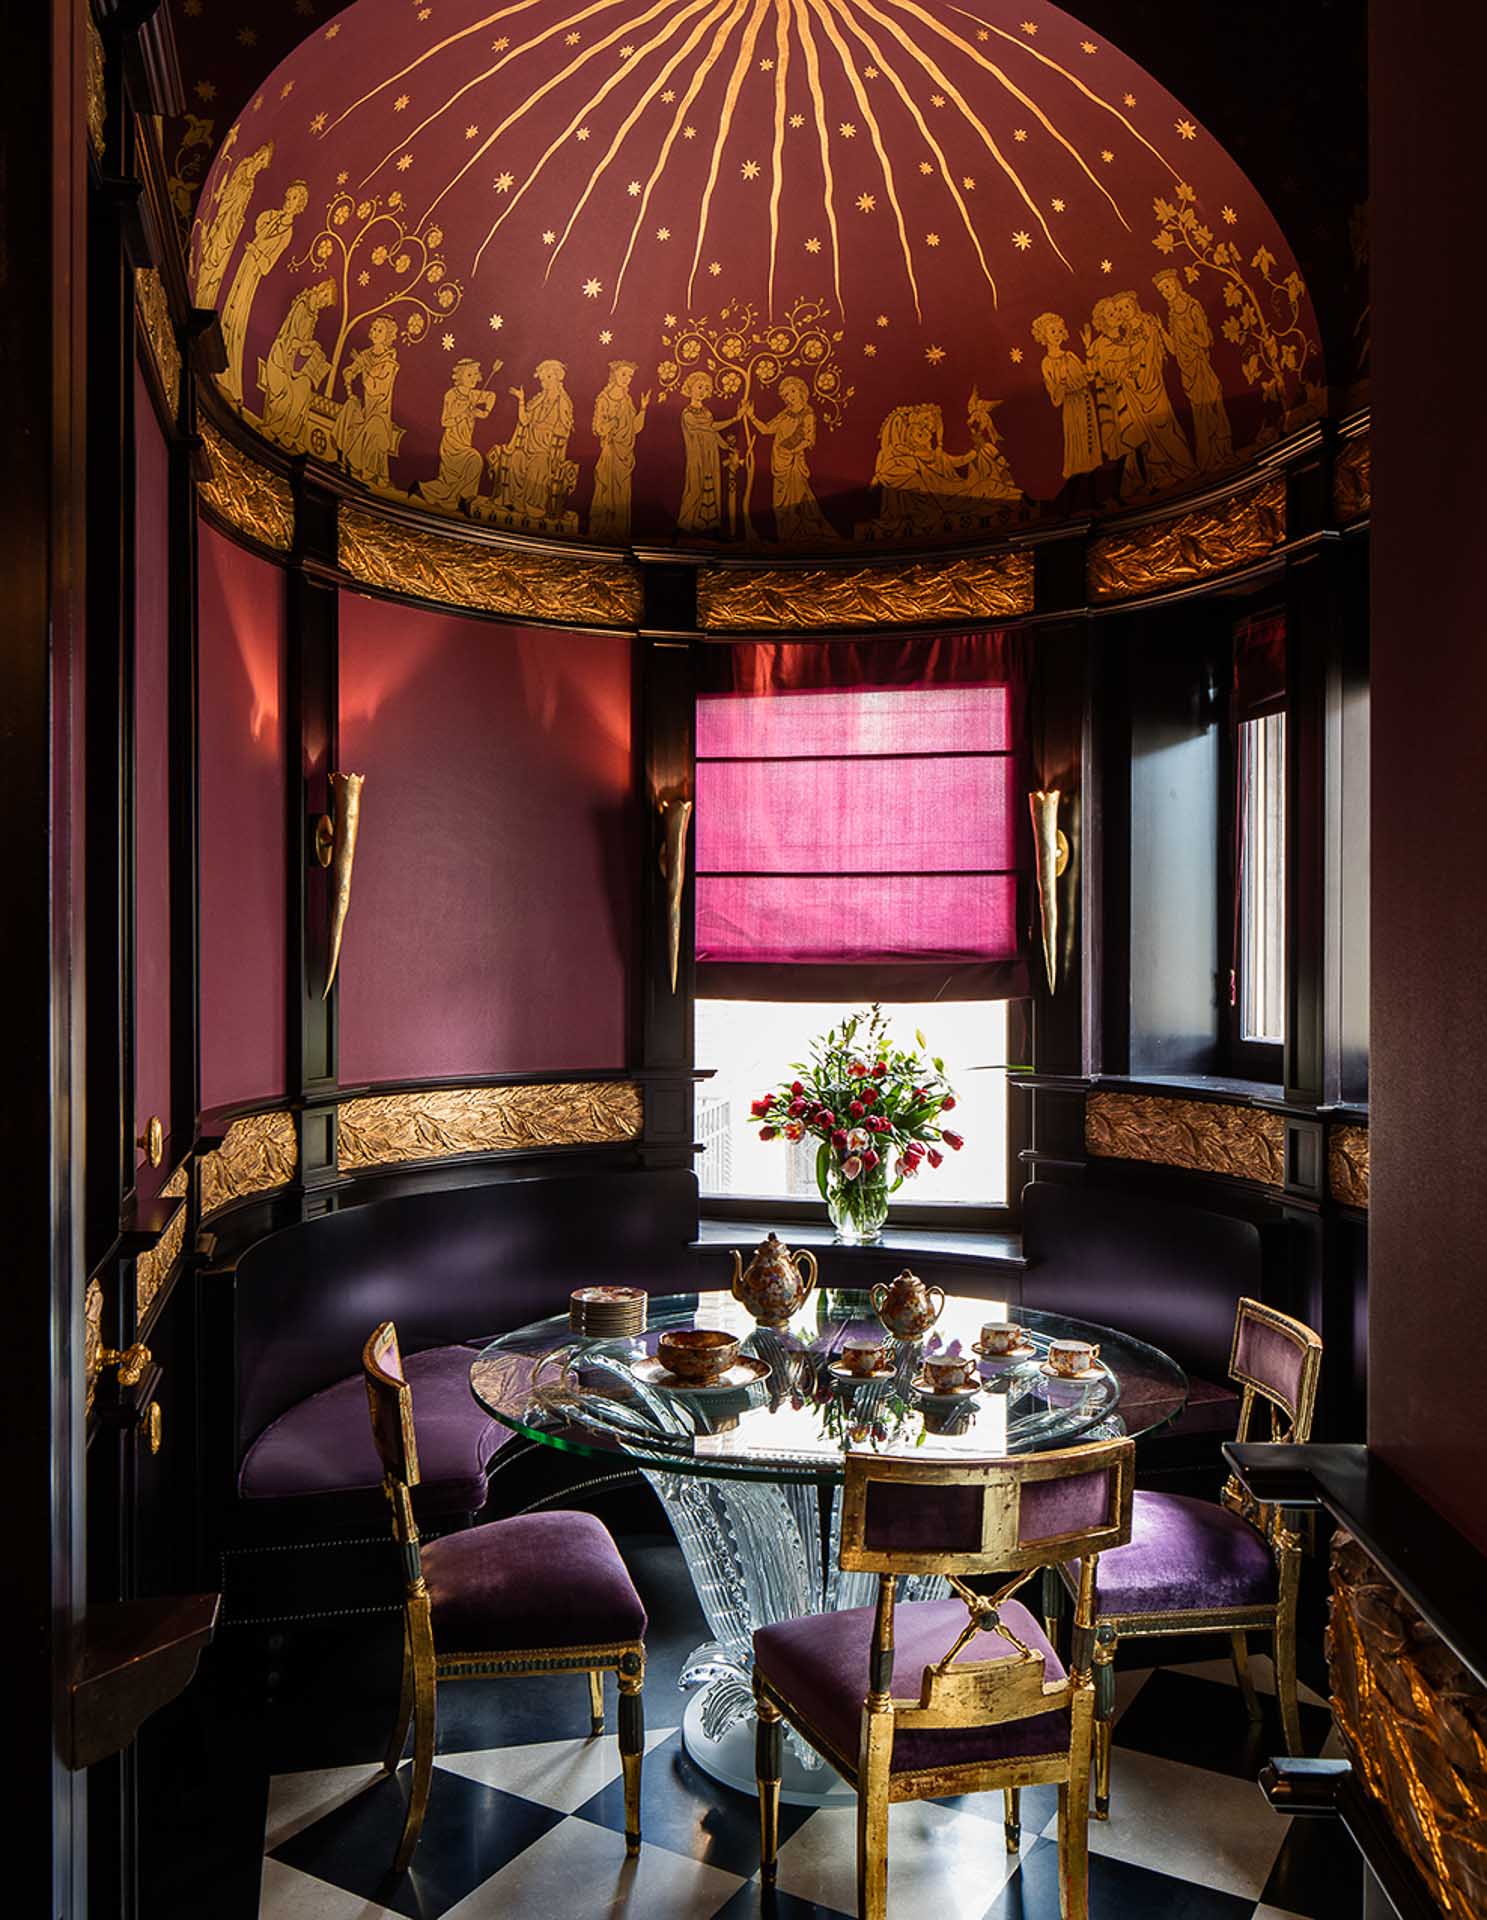 Villa Clara luxury home accommodation for rent in Rome breakfast room area private chef italian cuisine